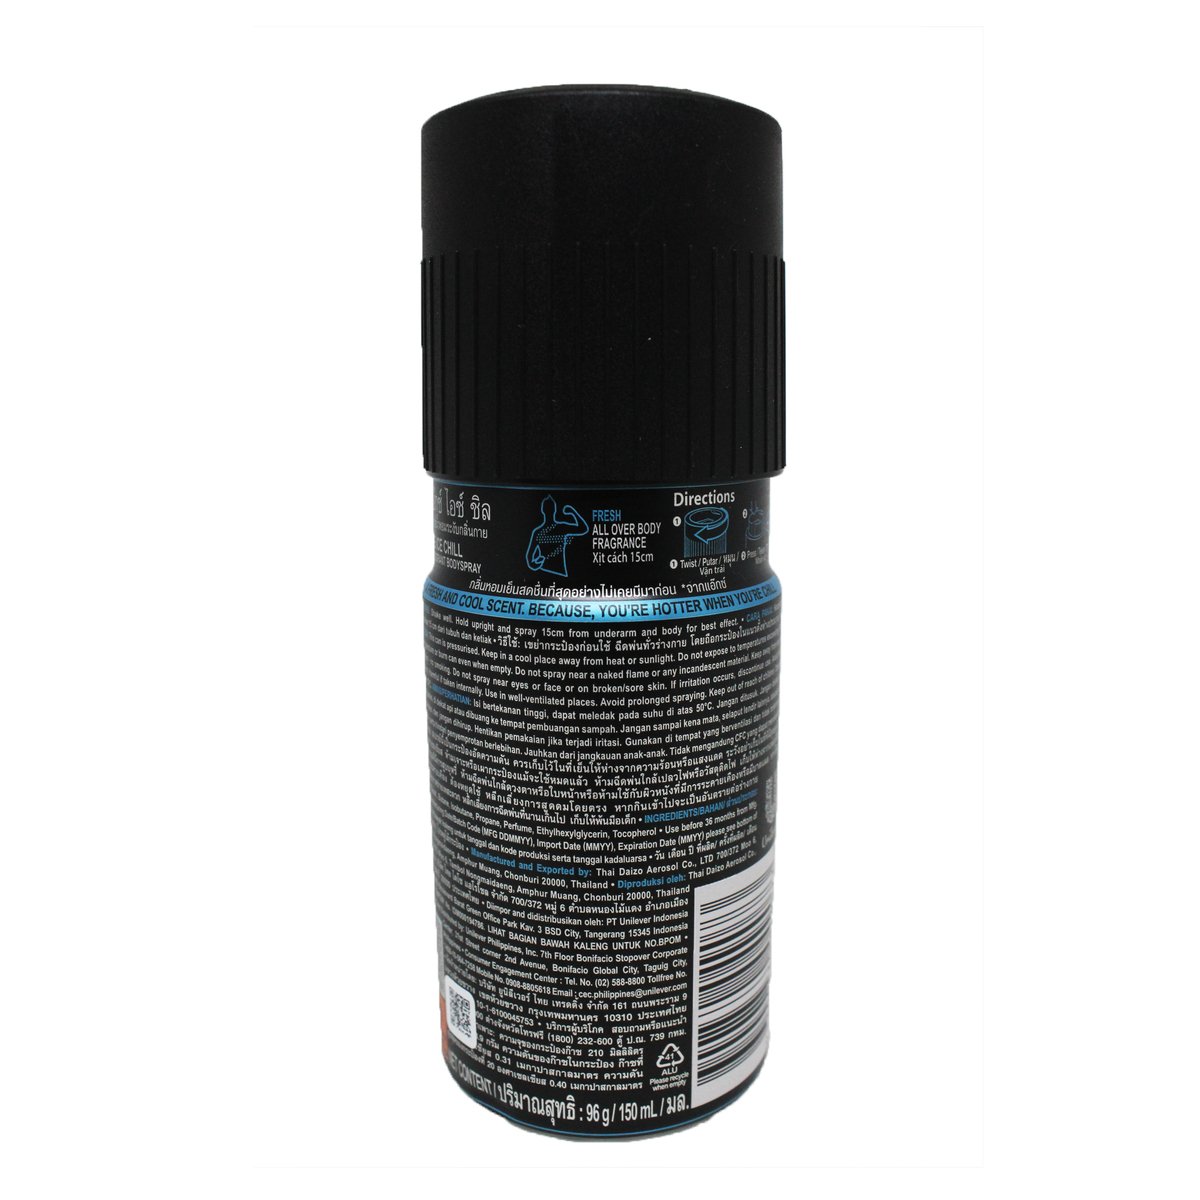 Axe Deodorant Spray Ice Chill 150ml